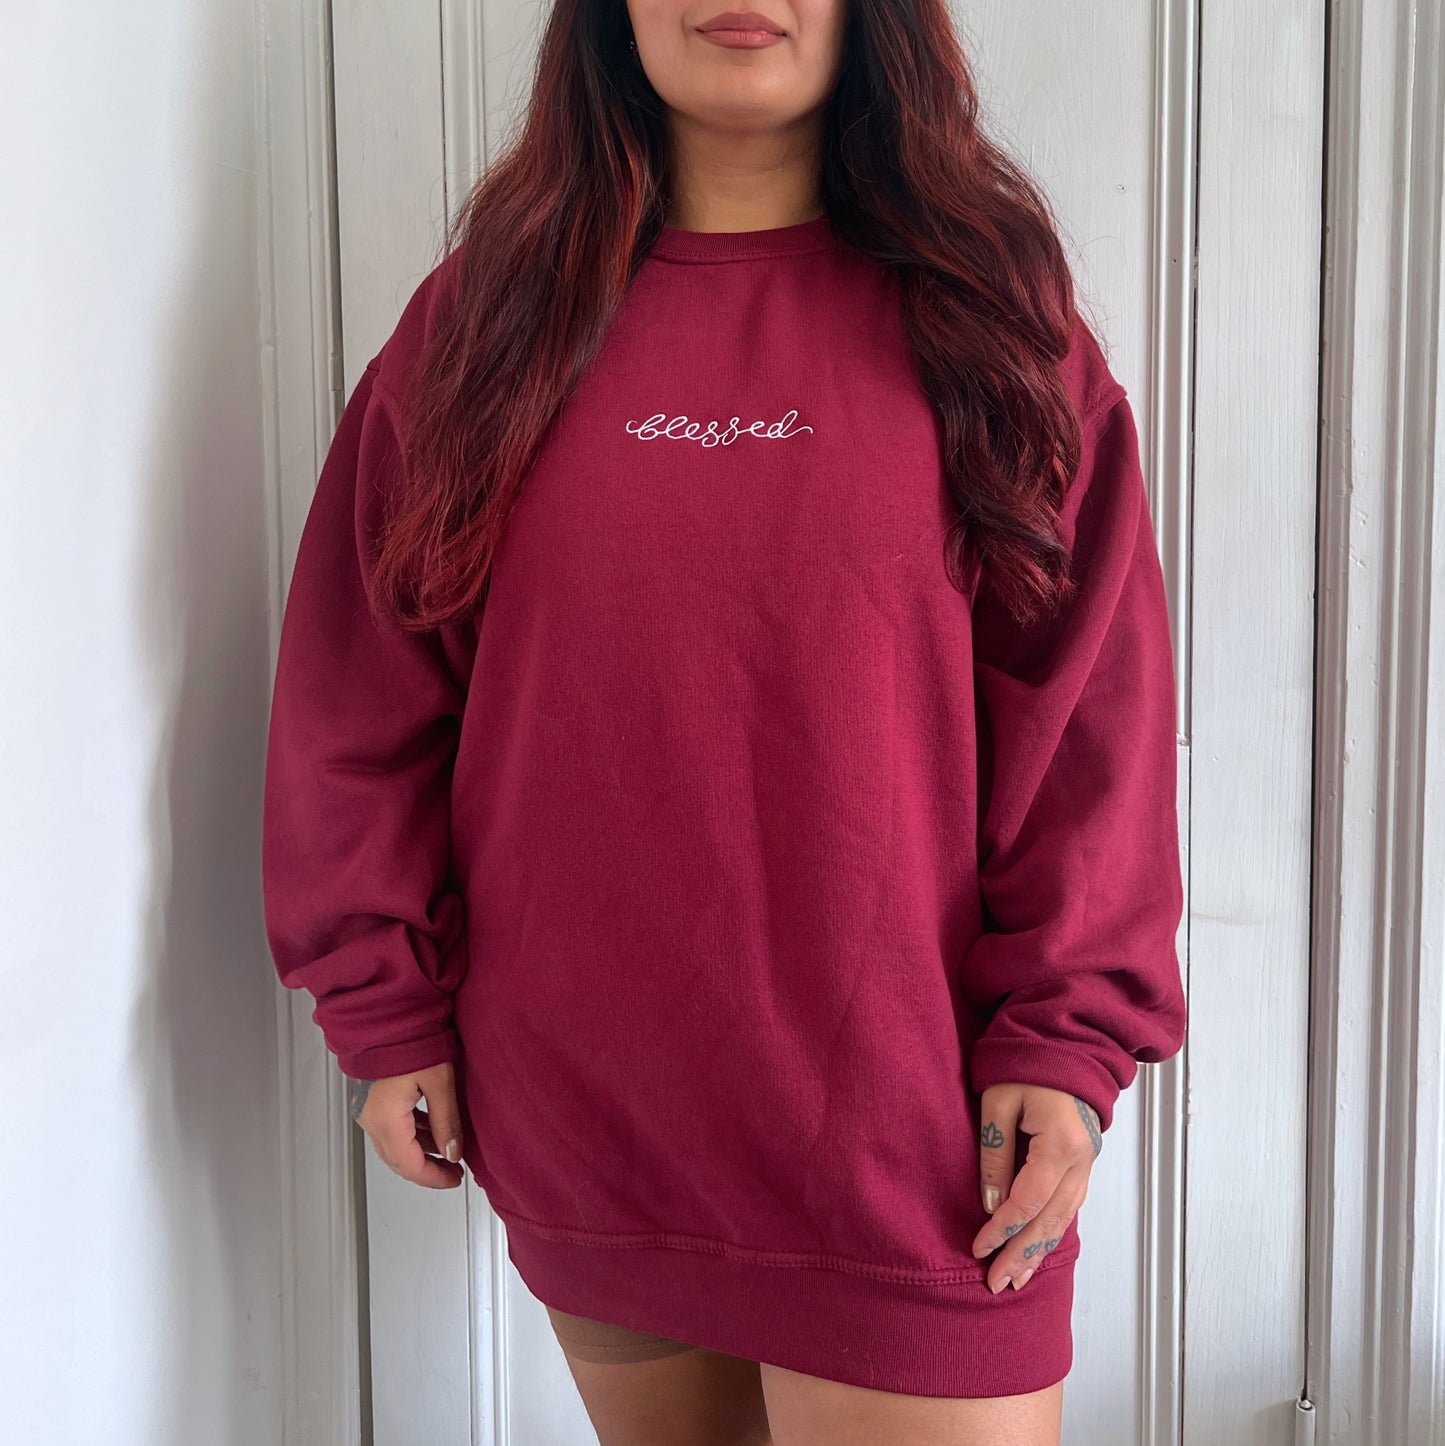 blessed embroidered sweatshirt - burgundy